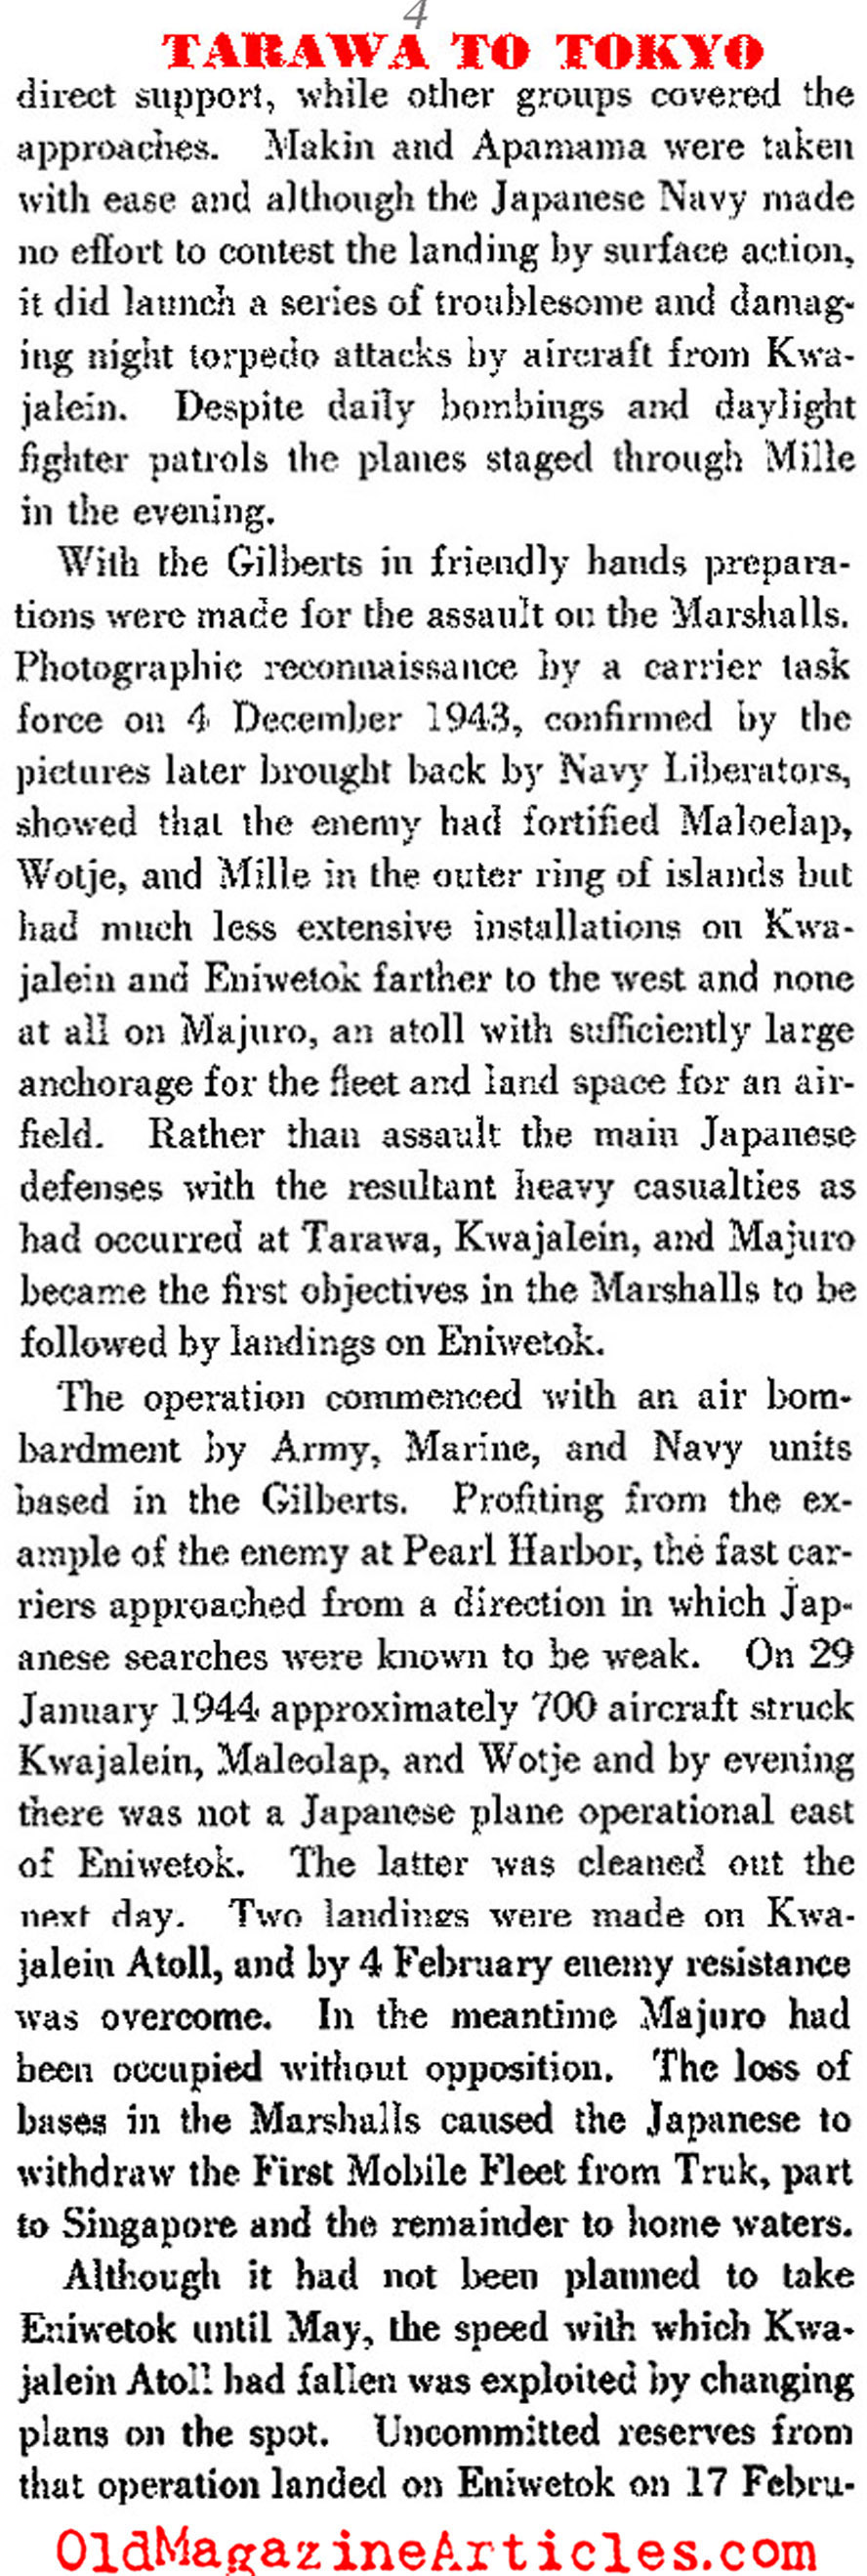 The U.S. Navy's War: Tarawa to Tokyo (Dept. of the Navy, 1947)